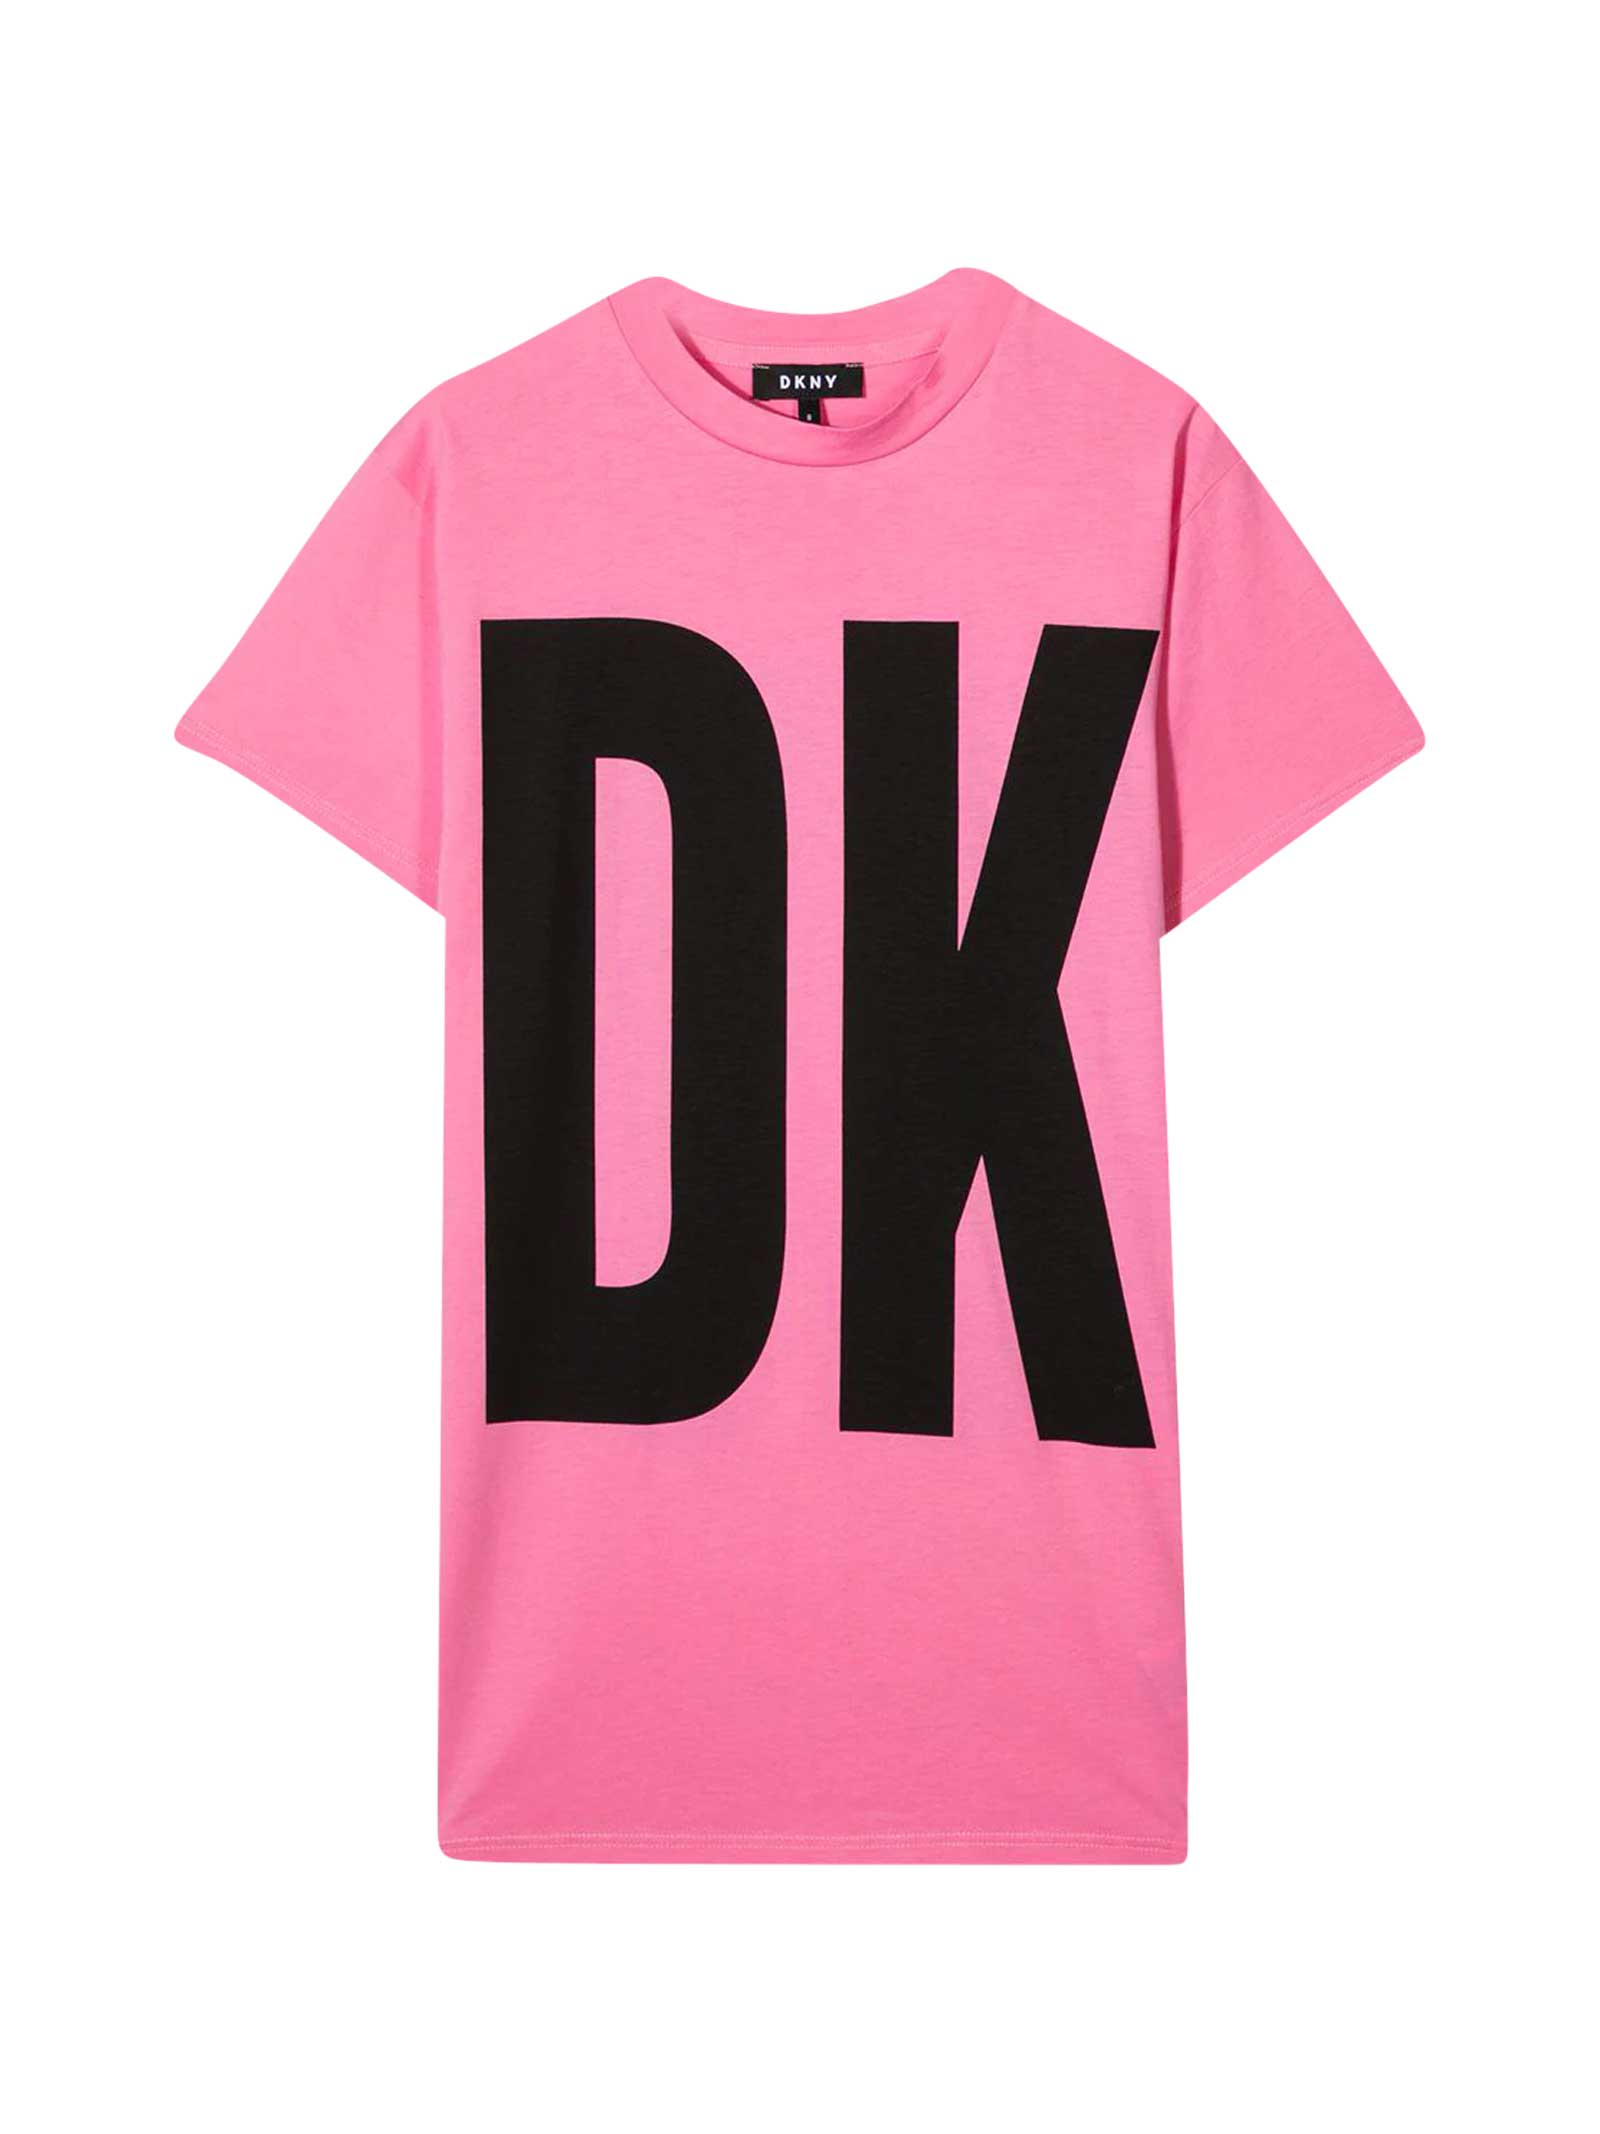 DKNY Teen T-shirt Dress With Print